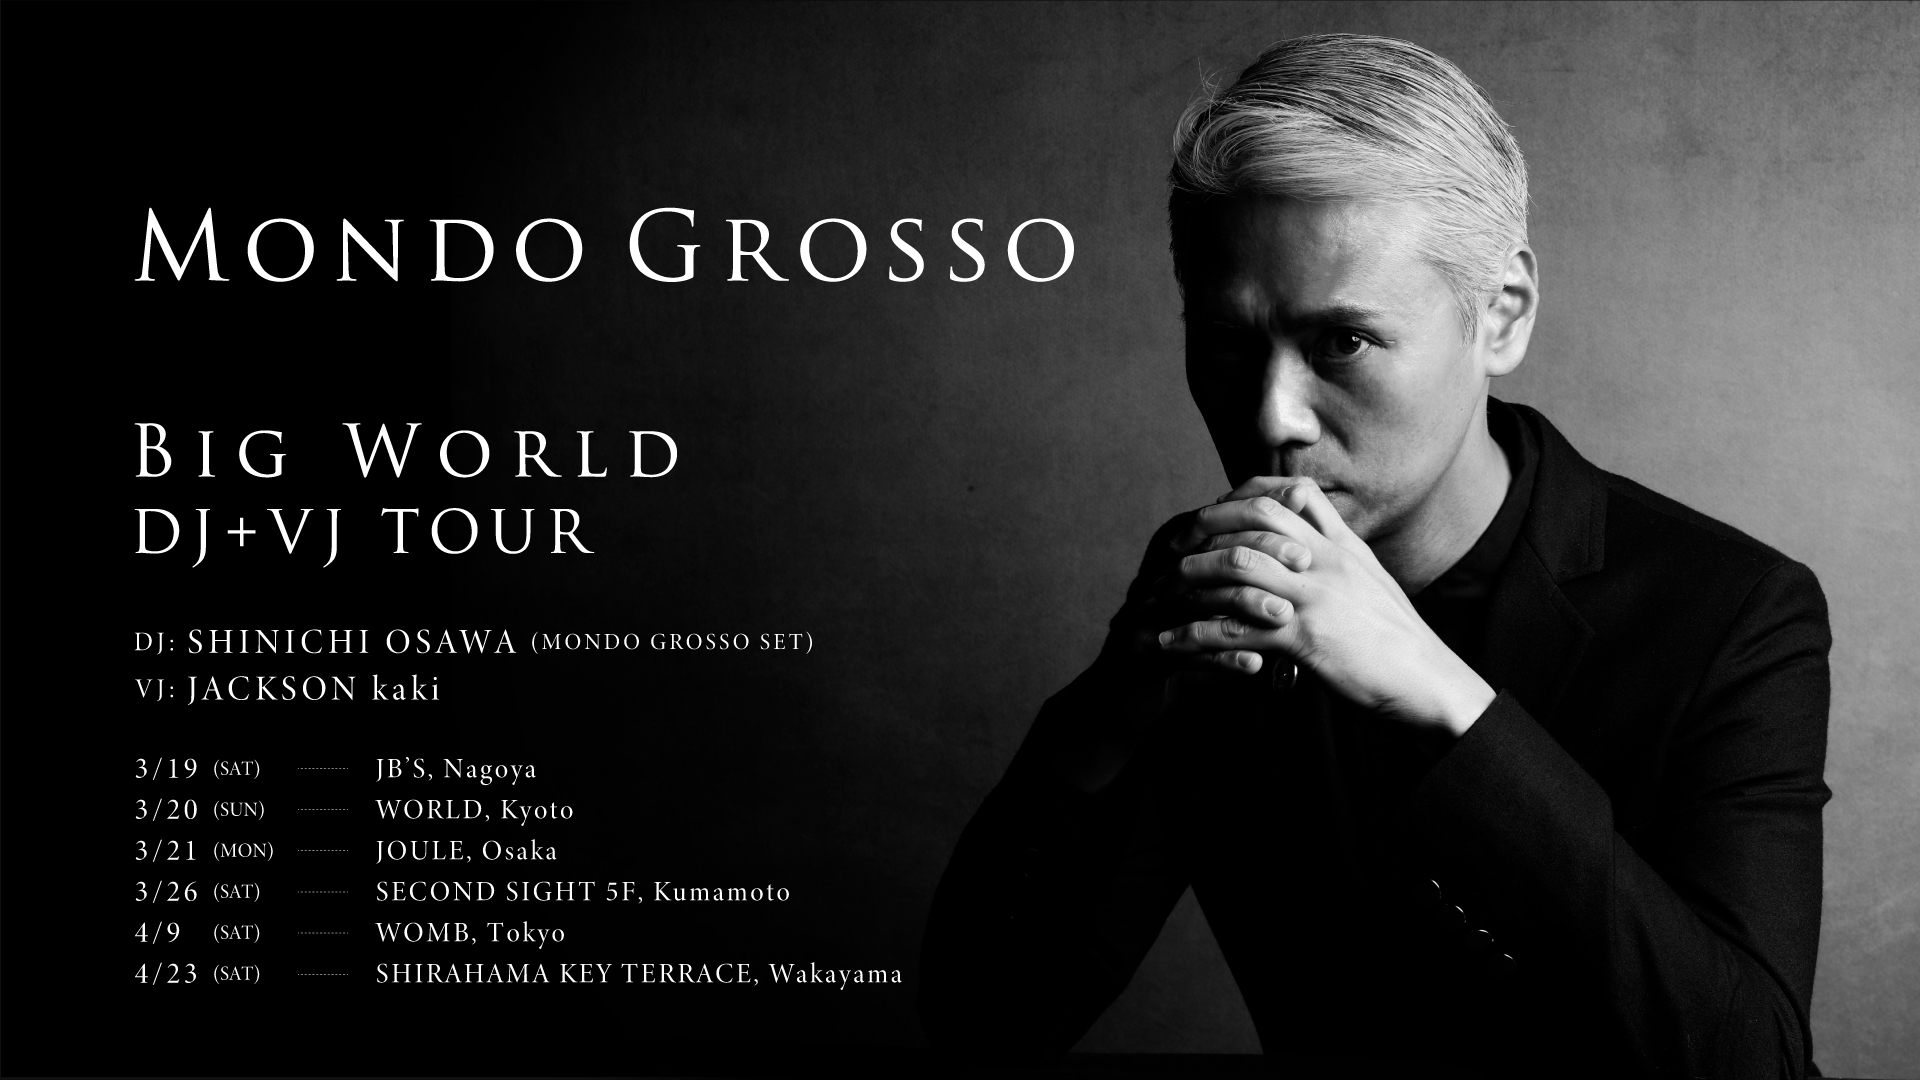 MONDO GROSSO ”BIG WORLD” DJ +VJ TOURのチケット情報・予約・購入 